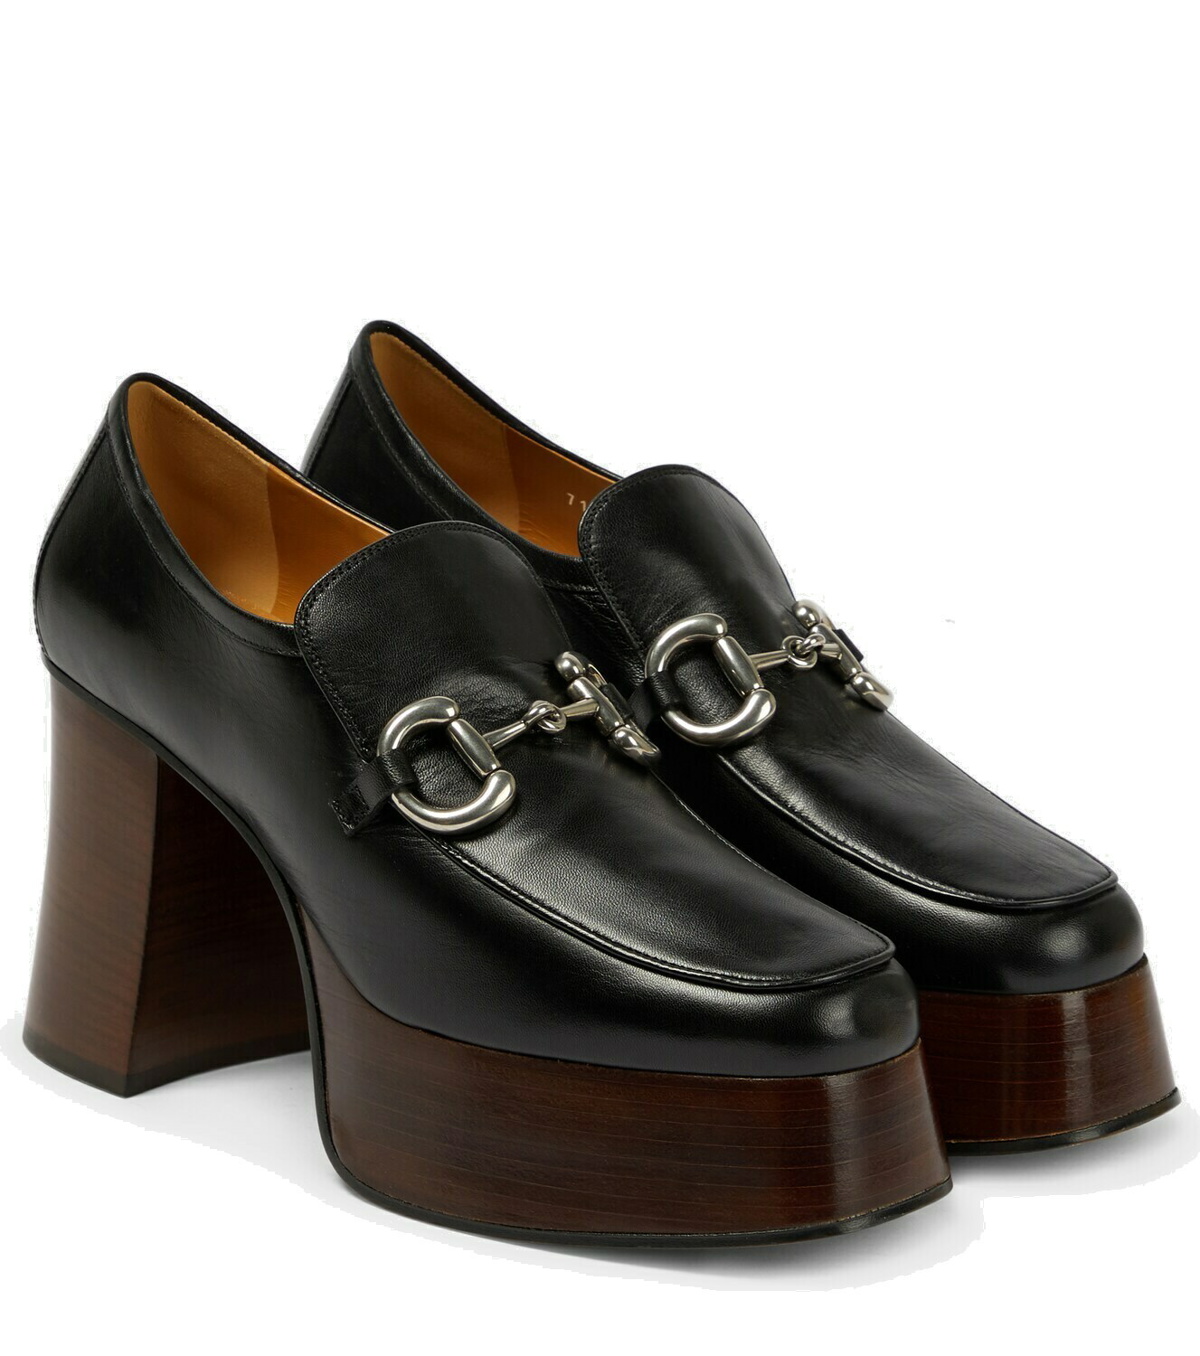 Gucci - Horsebit leather platform loafer pumps Gucci